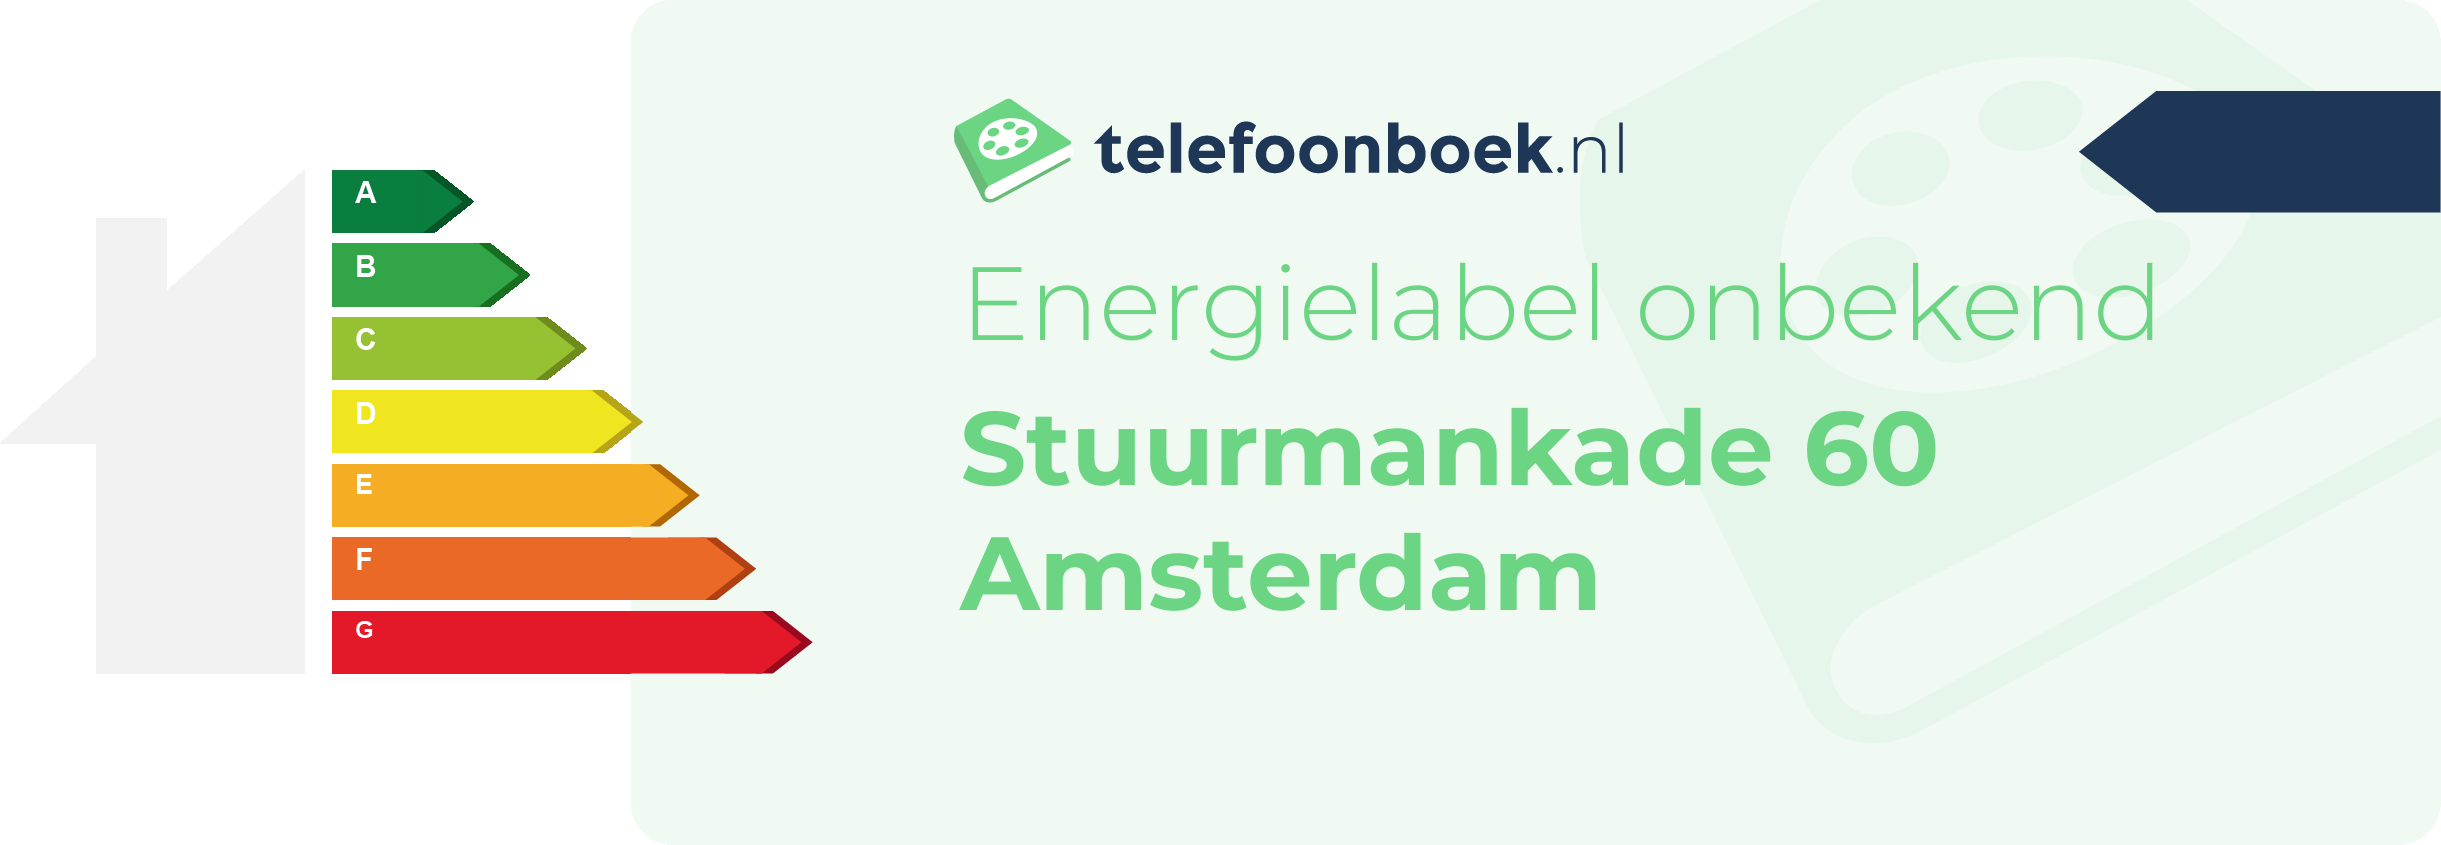 Energielabel Stuurmankade 60 Amsterdam